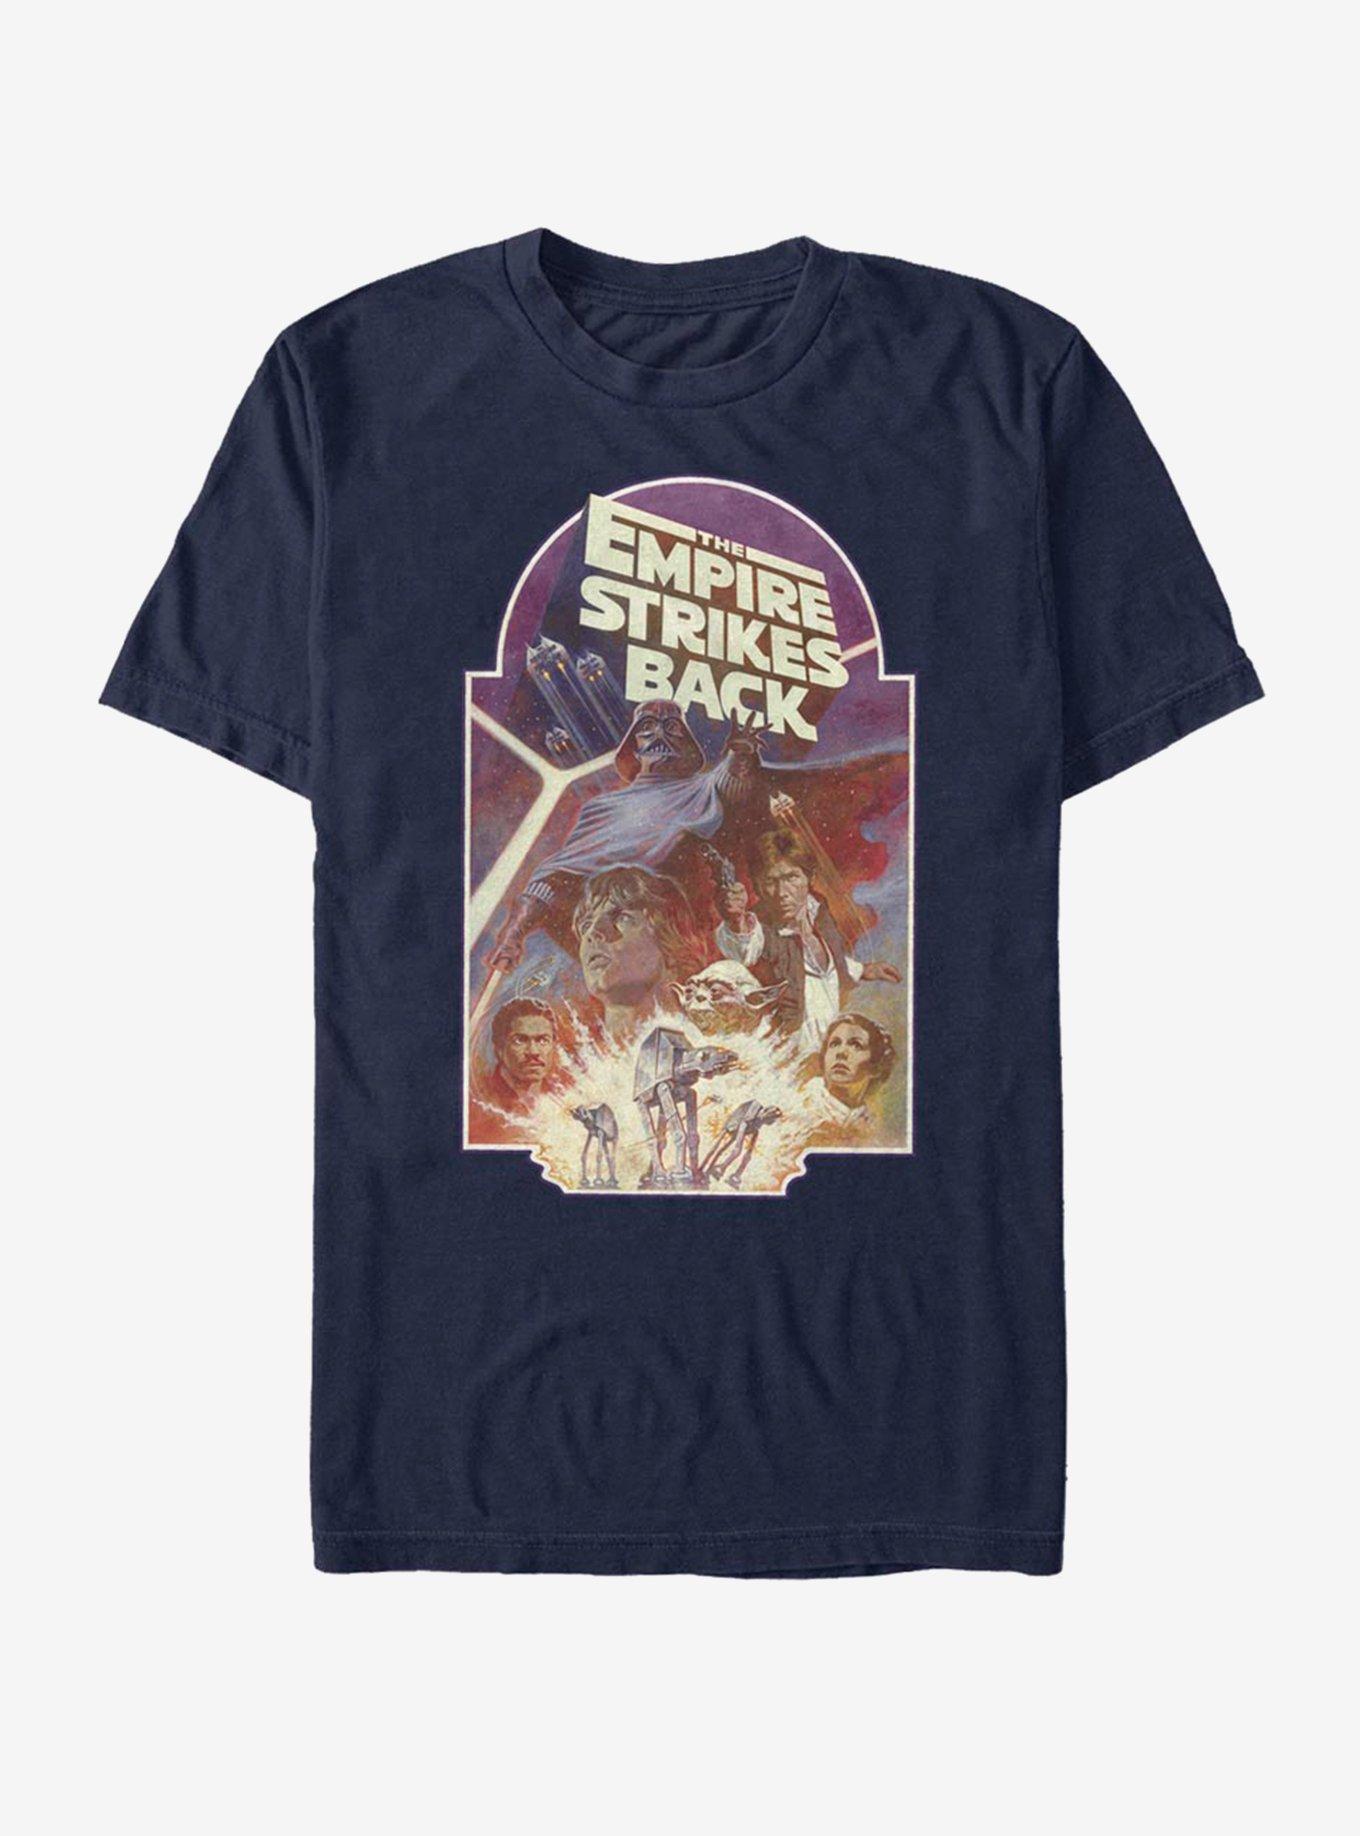 Star Wars Episode V The Empire Strikes Back Poster T-Shirt